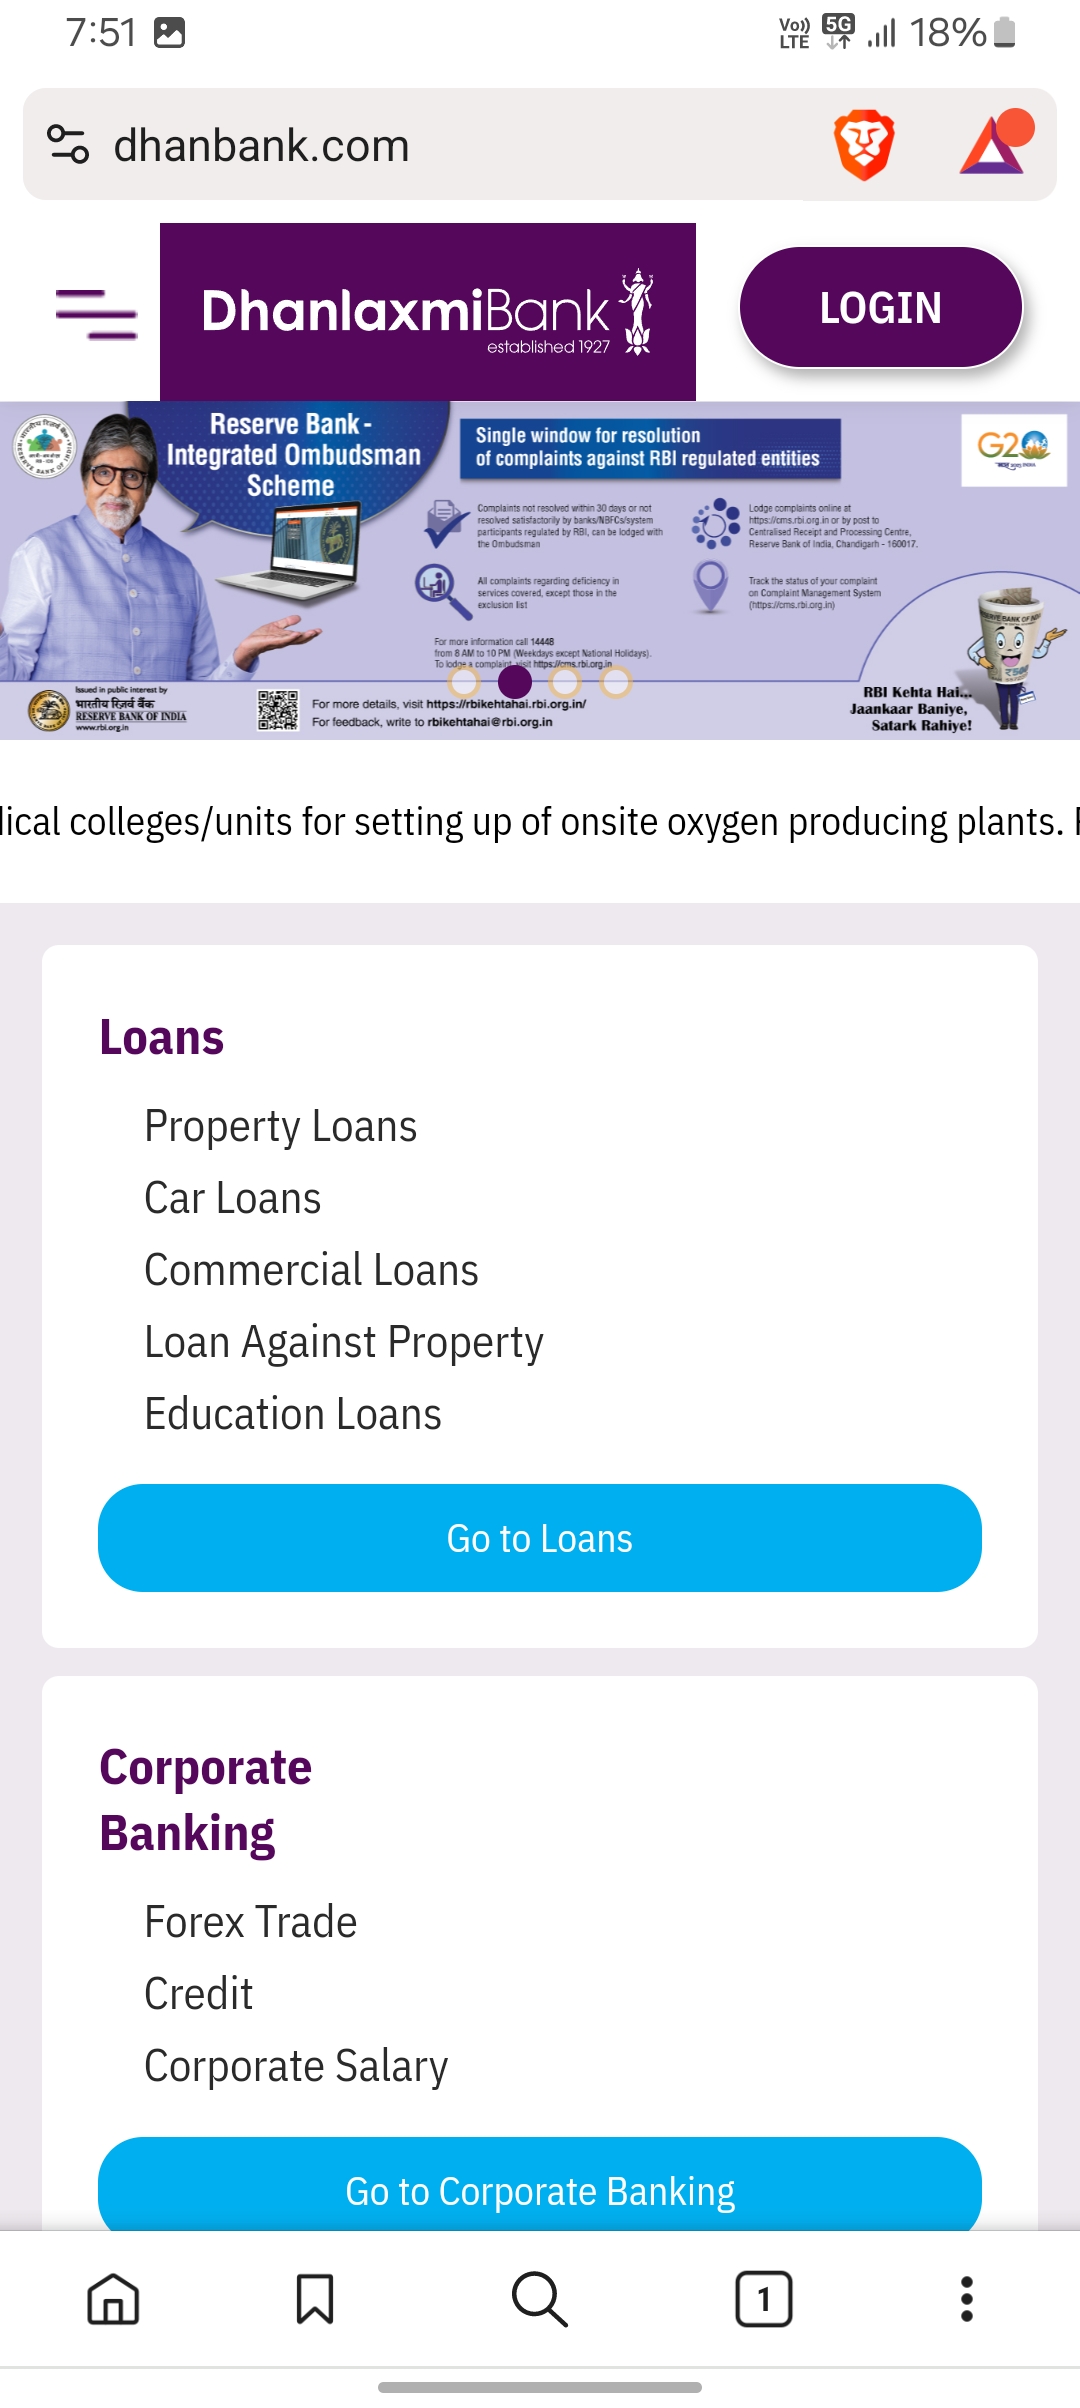 Dhanlaxmi bank se personal loan apply process step by step